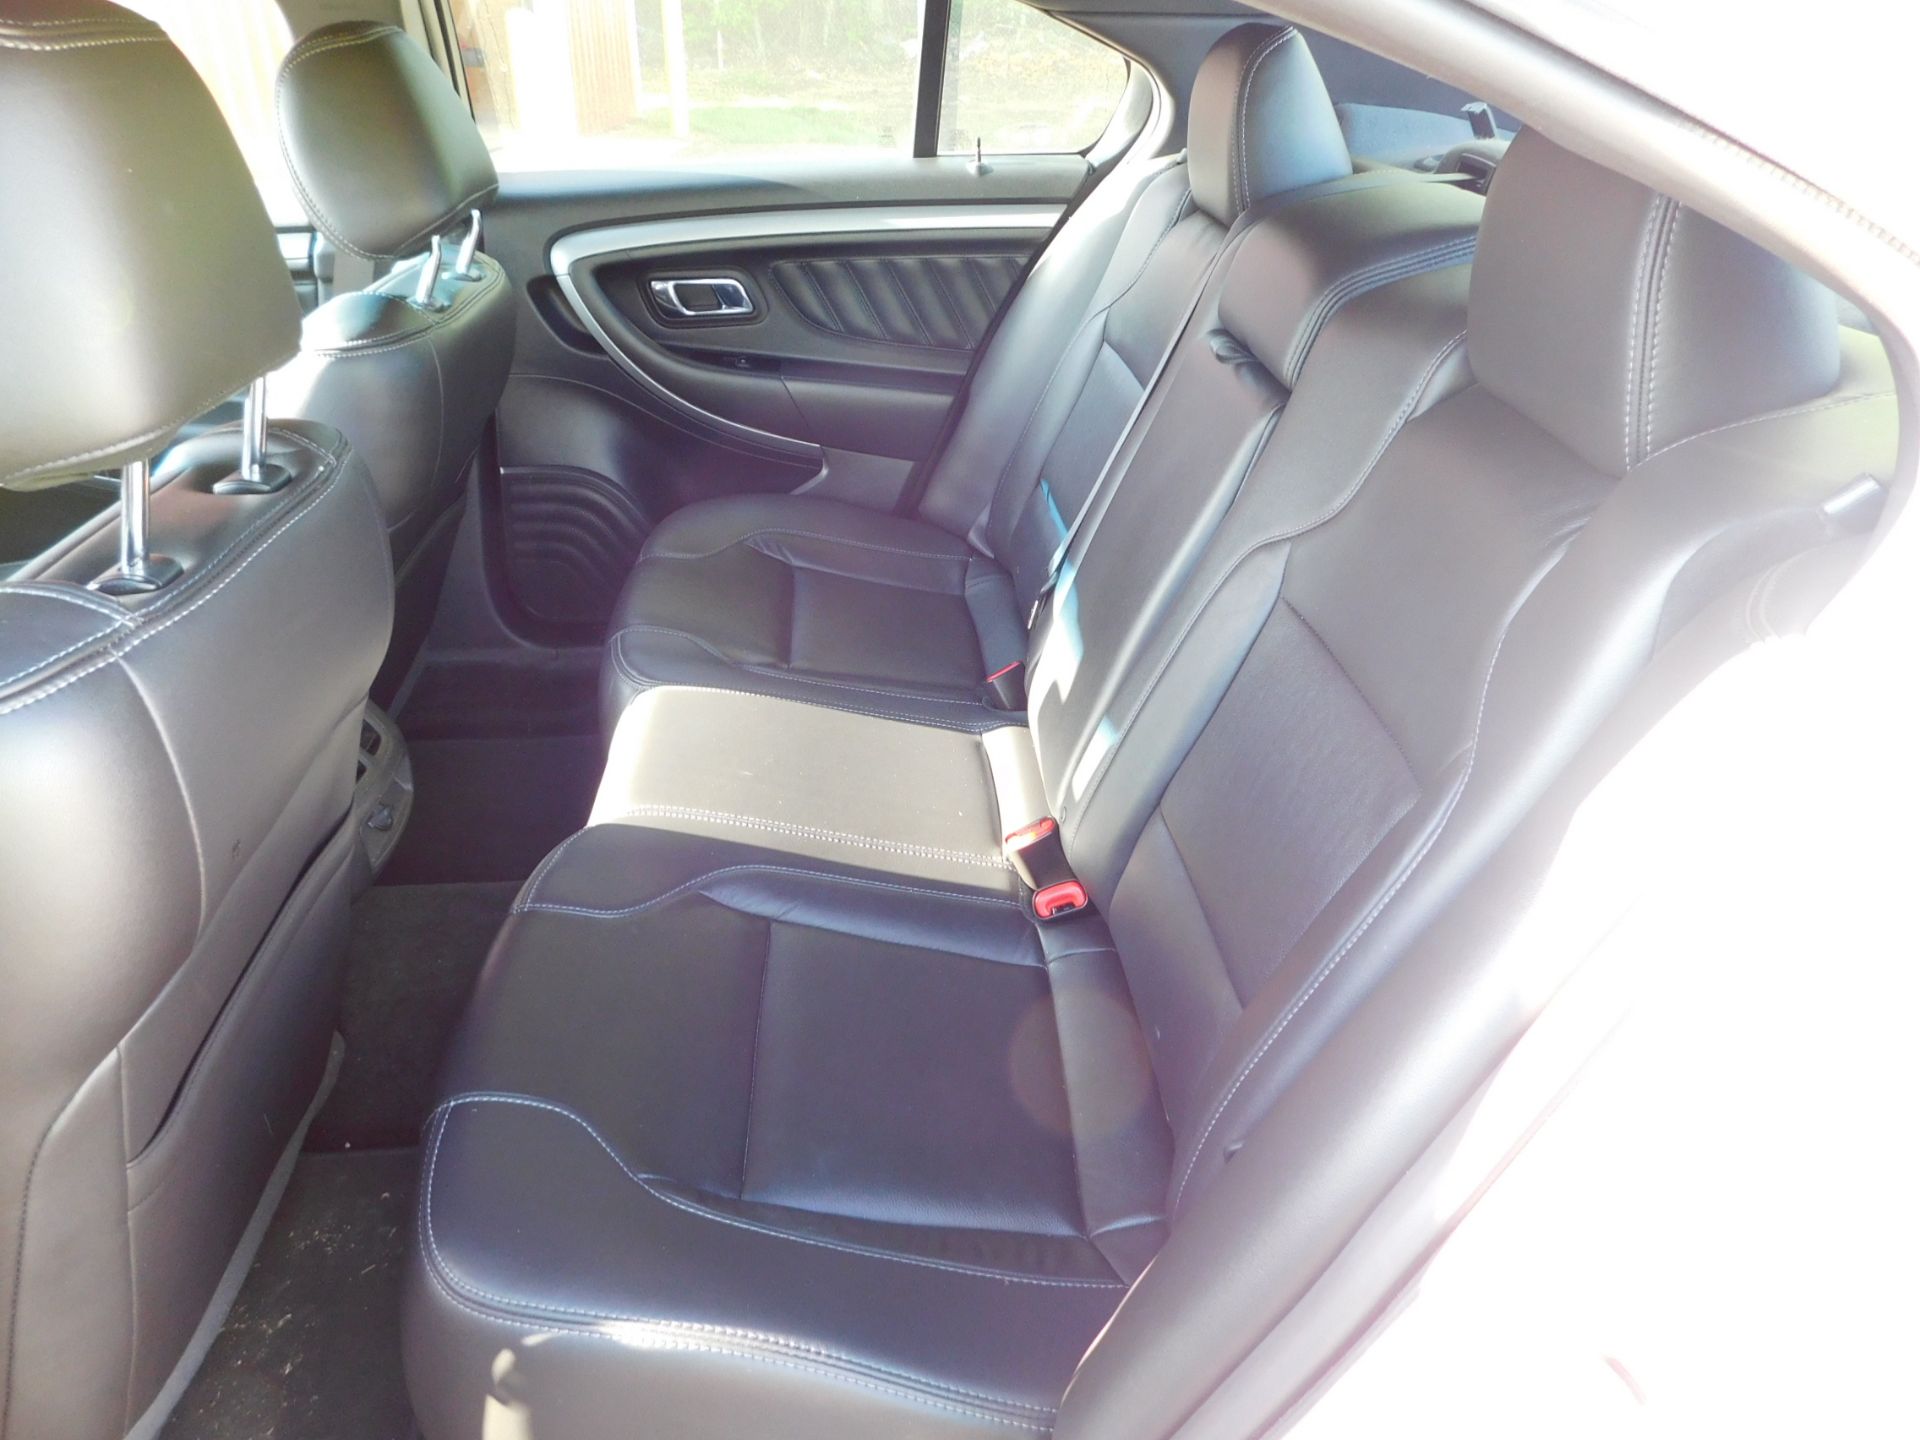 2015 Ford Taurus SEL 4-Door Sedan, vin 1FAHP2E80FG182717, Automatic Transmission, PW,PL,AC,Leather - Image 29 of 42